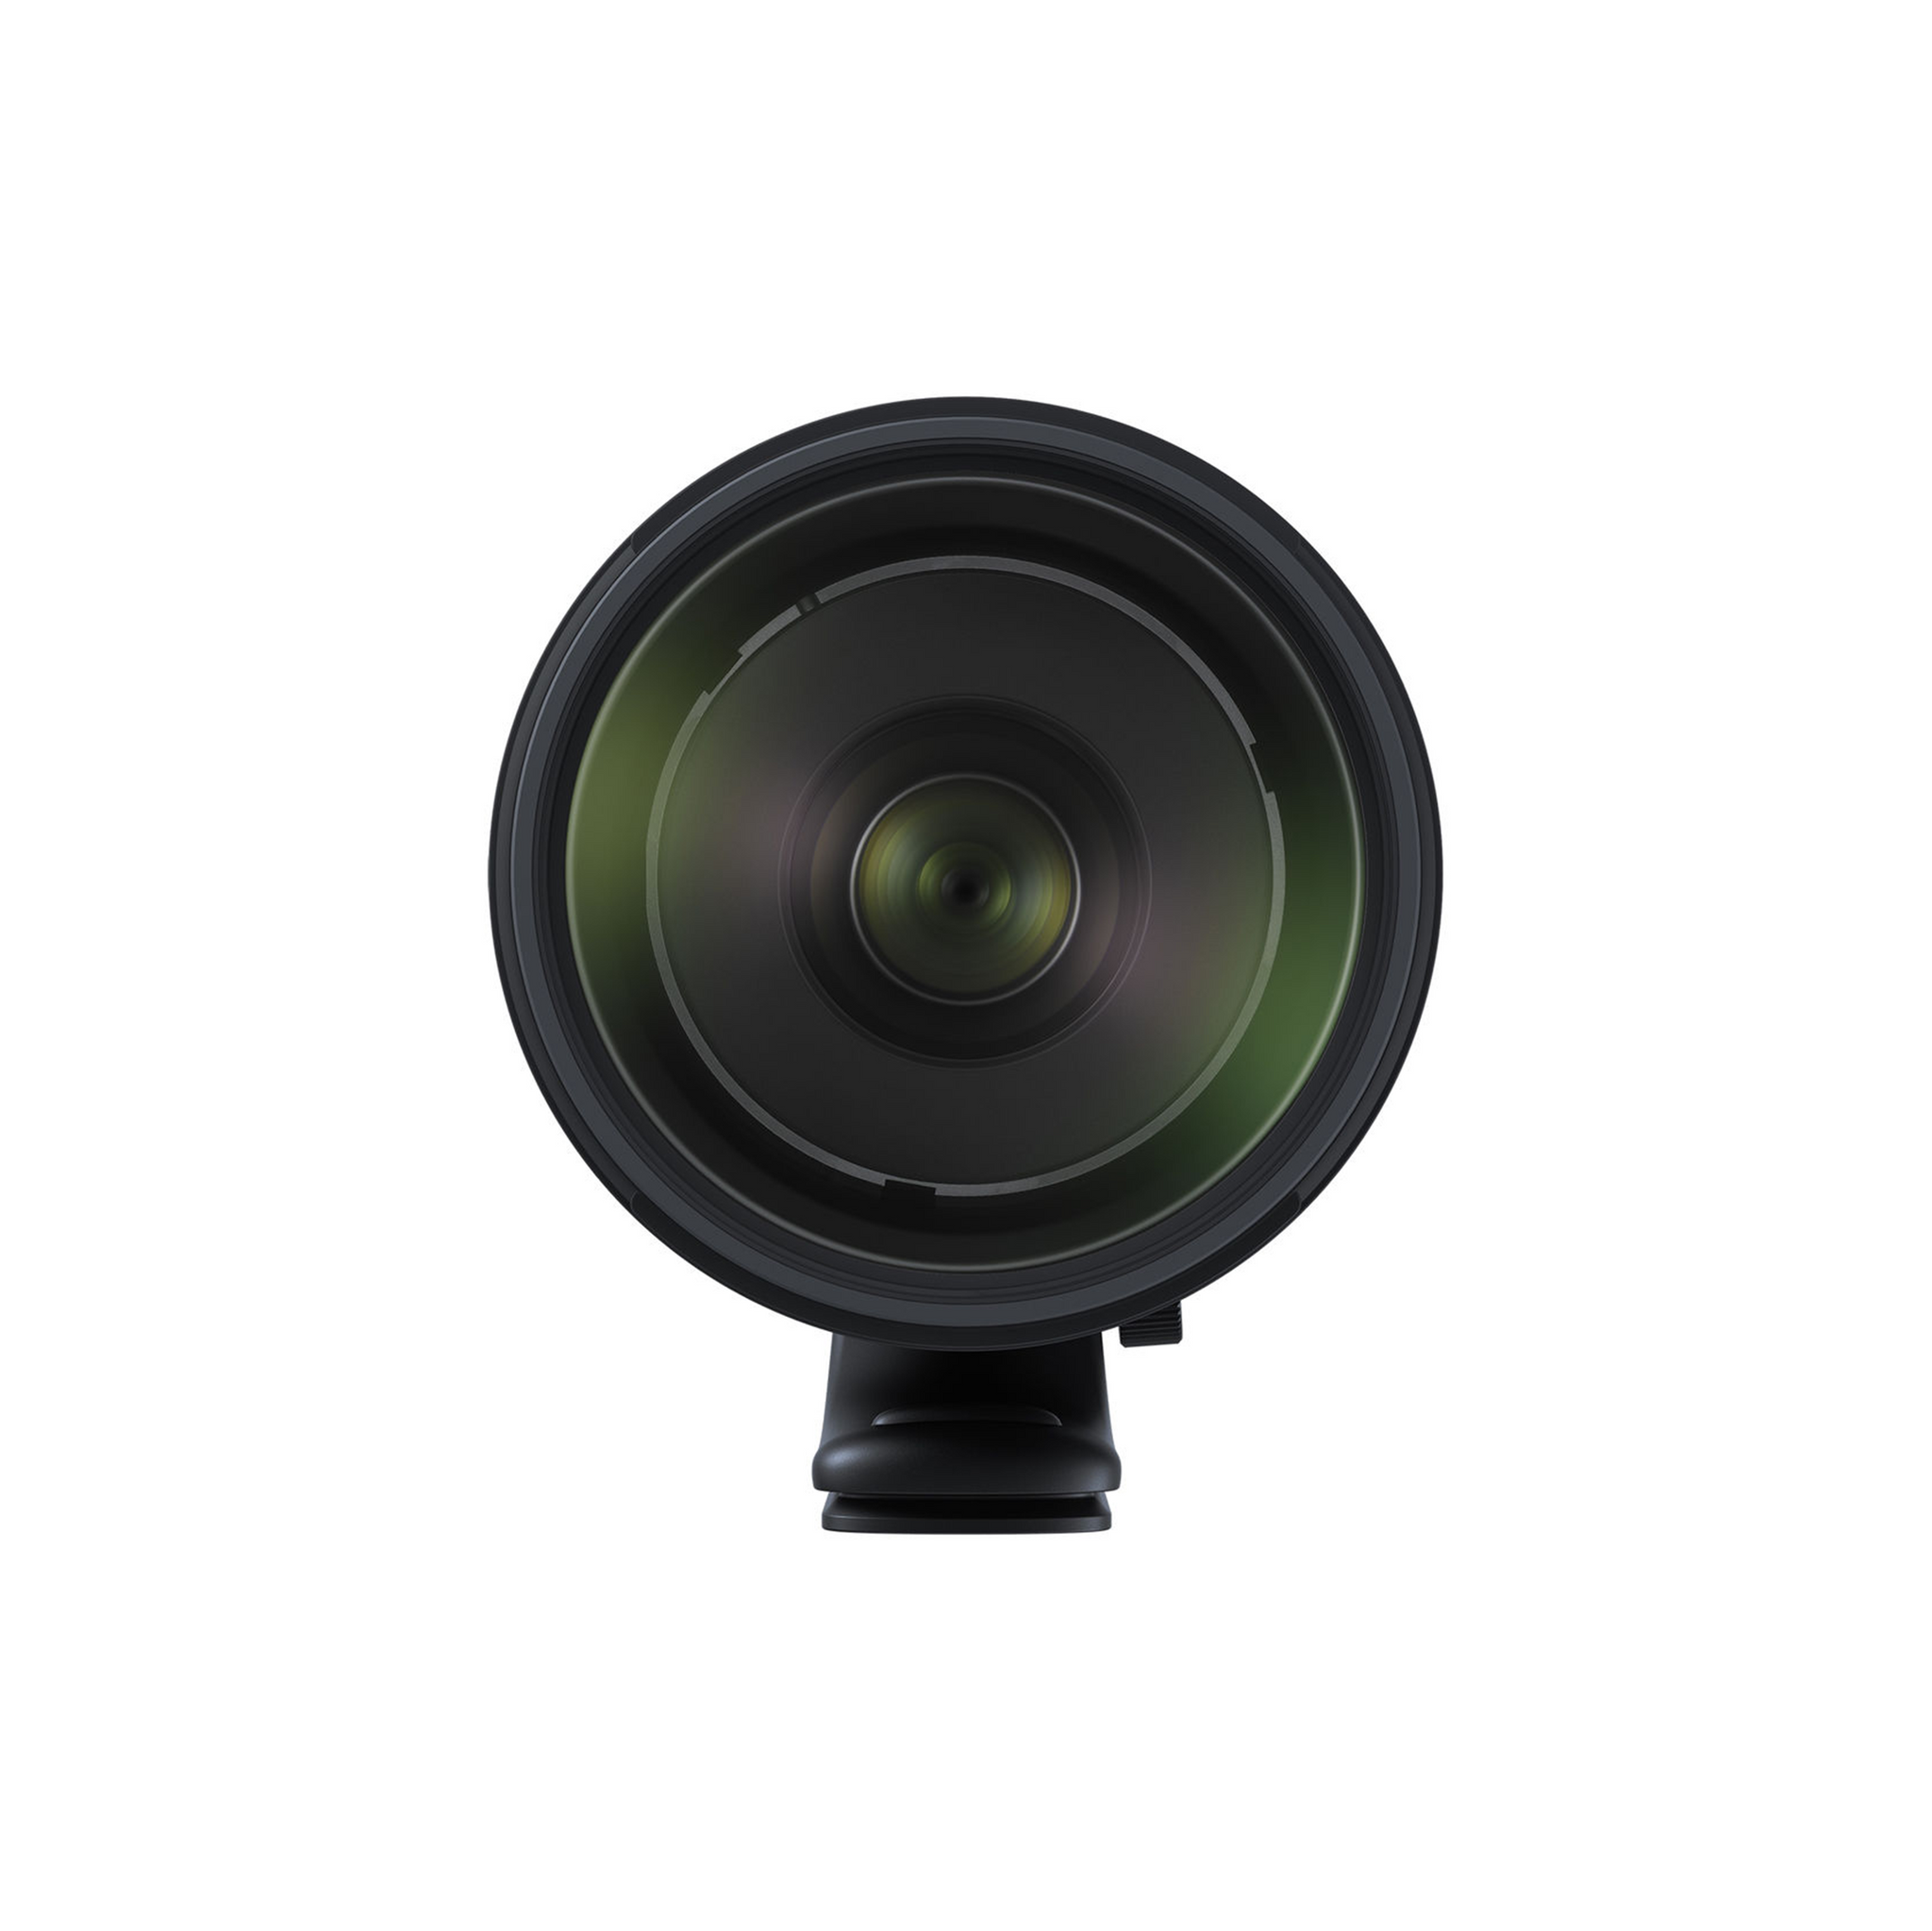 Tamron SP 150-600mm F/5-6.3 Di VC USD G2 Lens (A022) (For Nikon/Canon)-Camera Lenses-futuromic